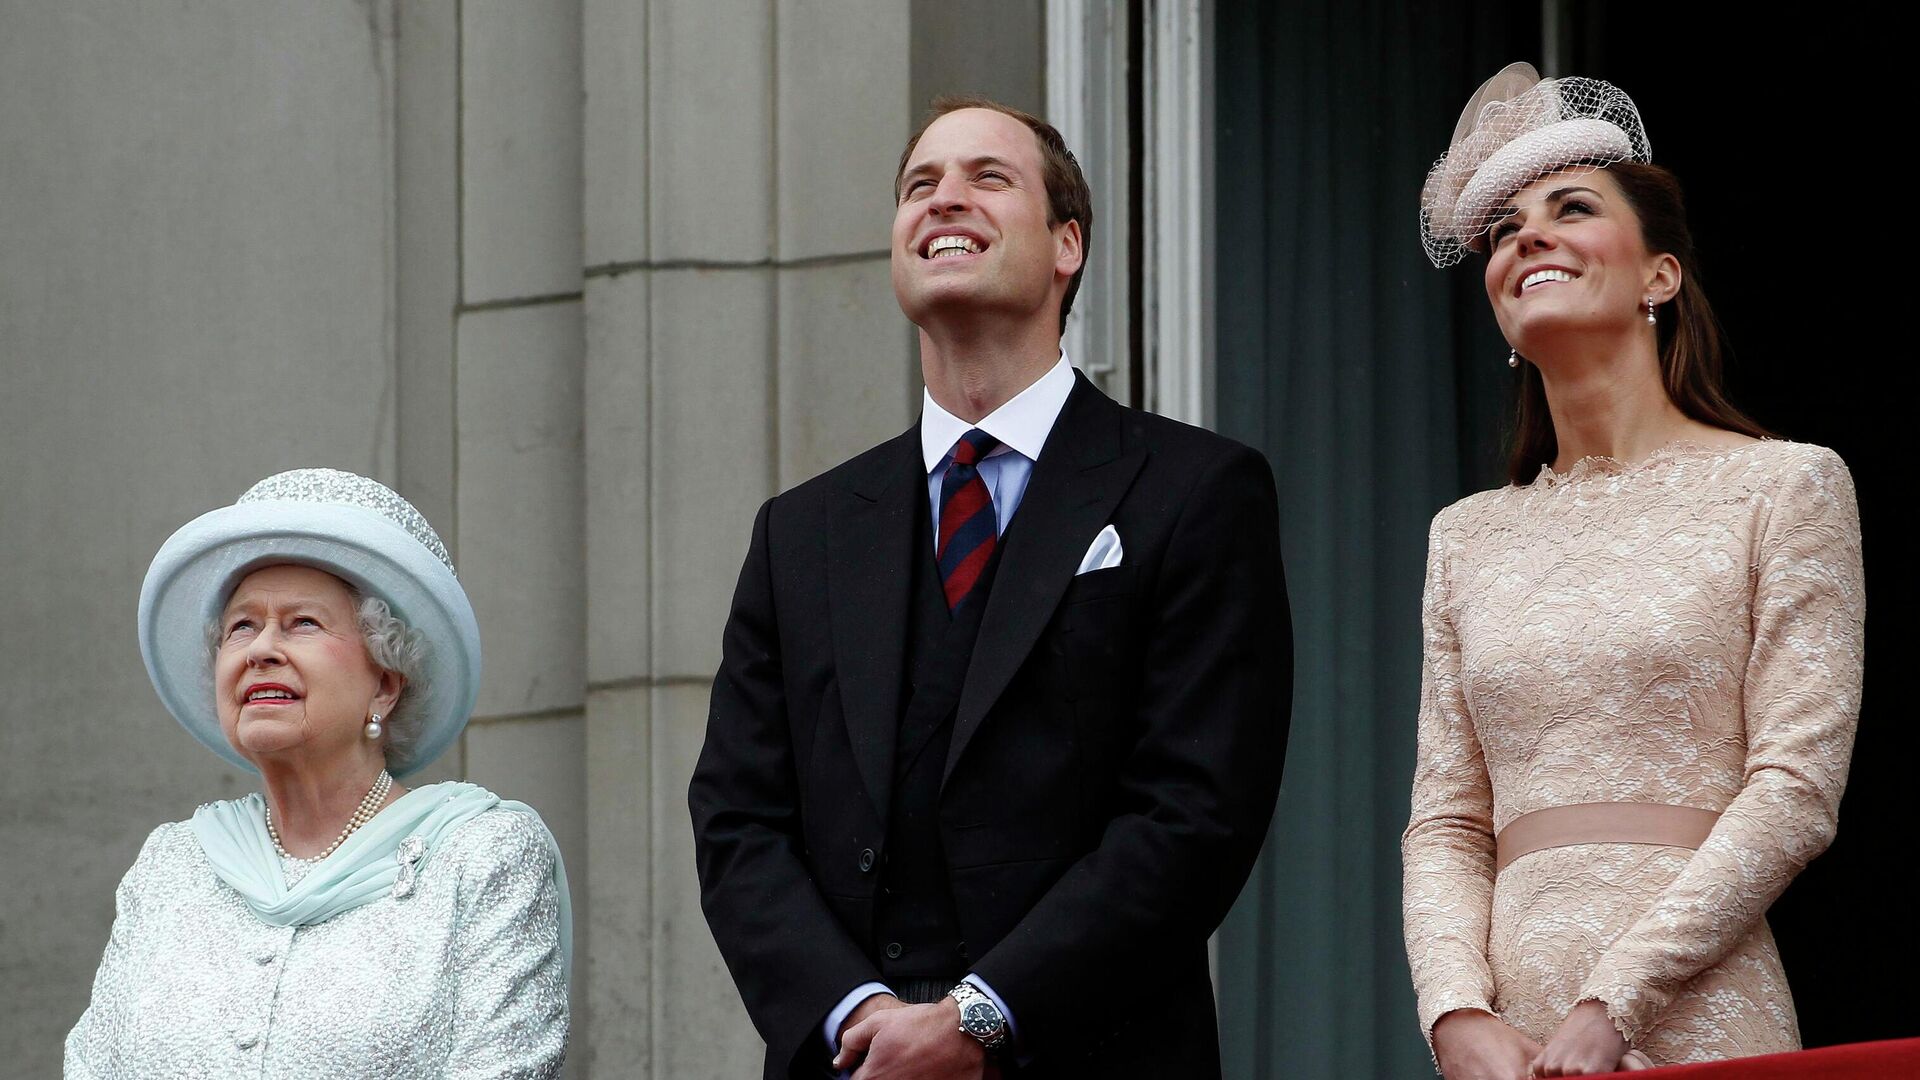 La reina Isabel II junto a William y Kate, en 2012 - Sputnik Mundo, 1920, 08.08.2021